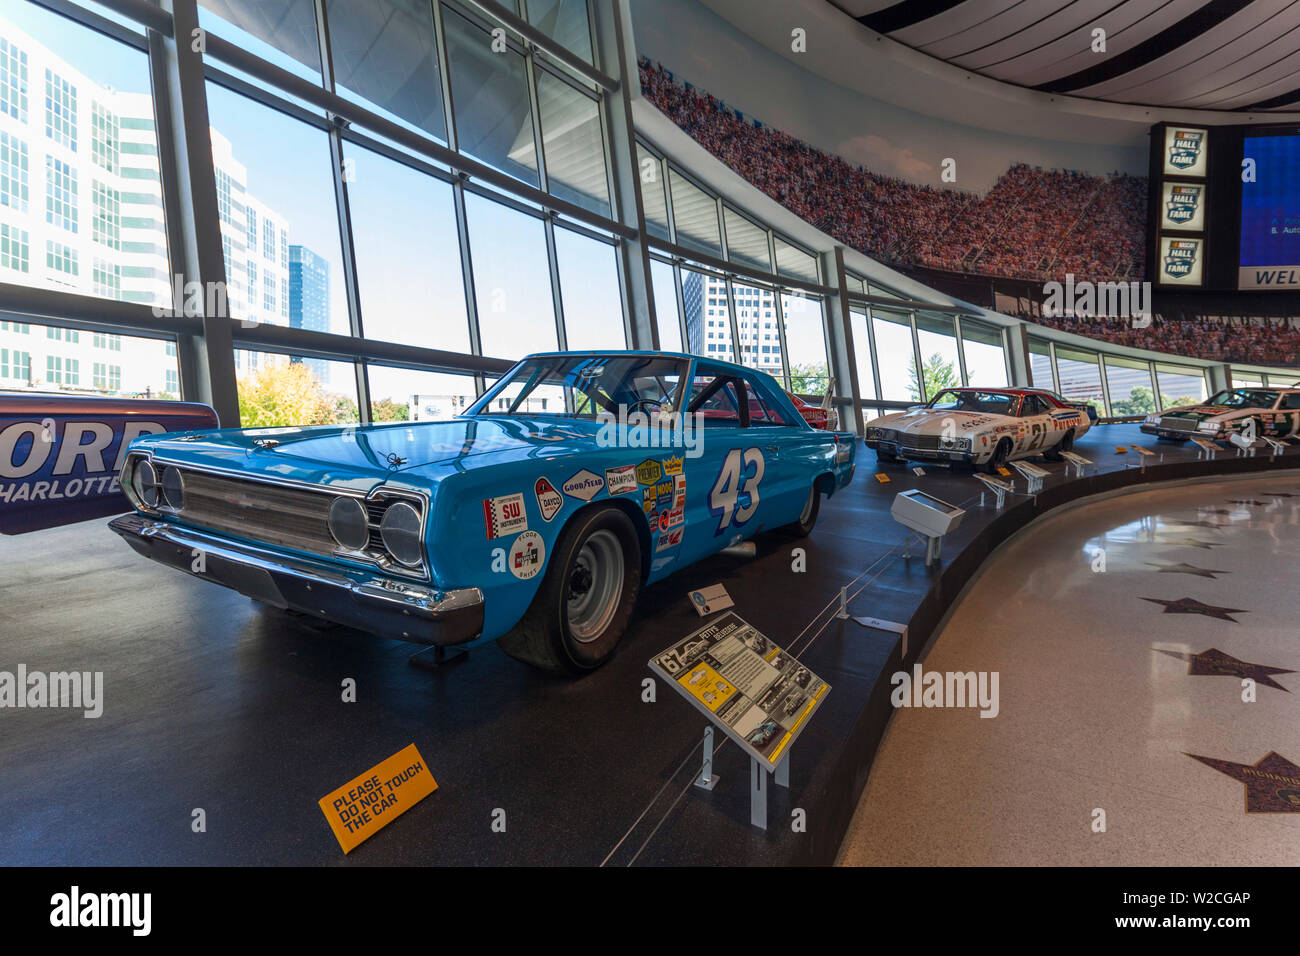 USA, North Carolina, Charlotte, Nascar Hall of Fame, famous racing stock cars Stock Photo